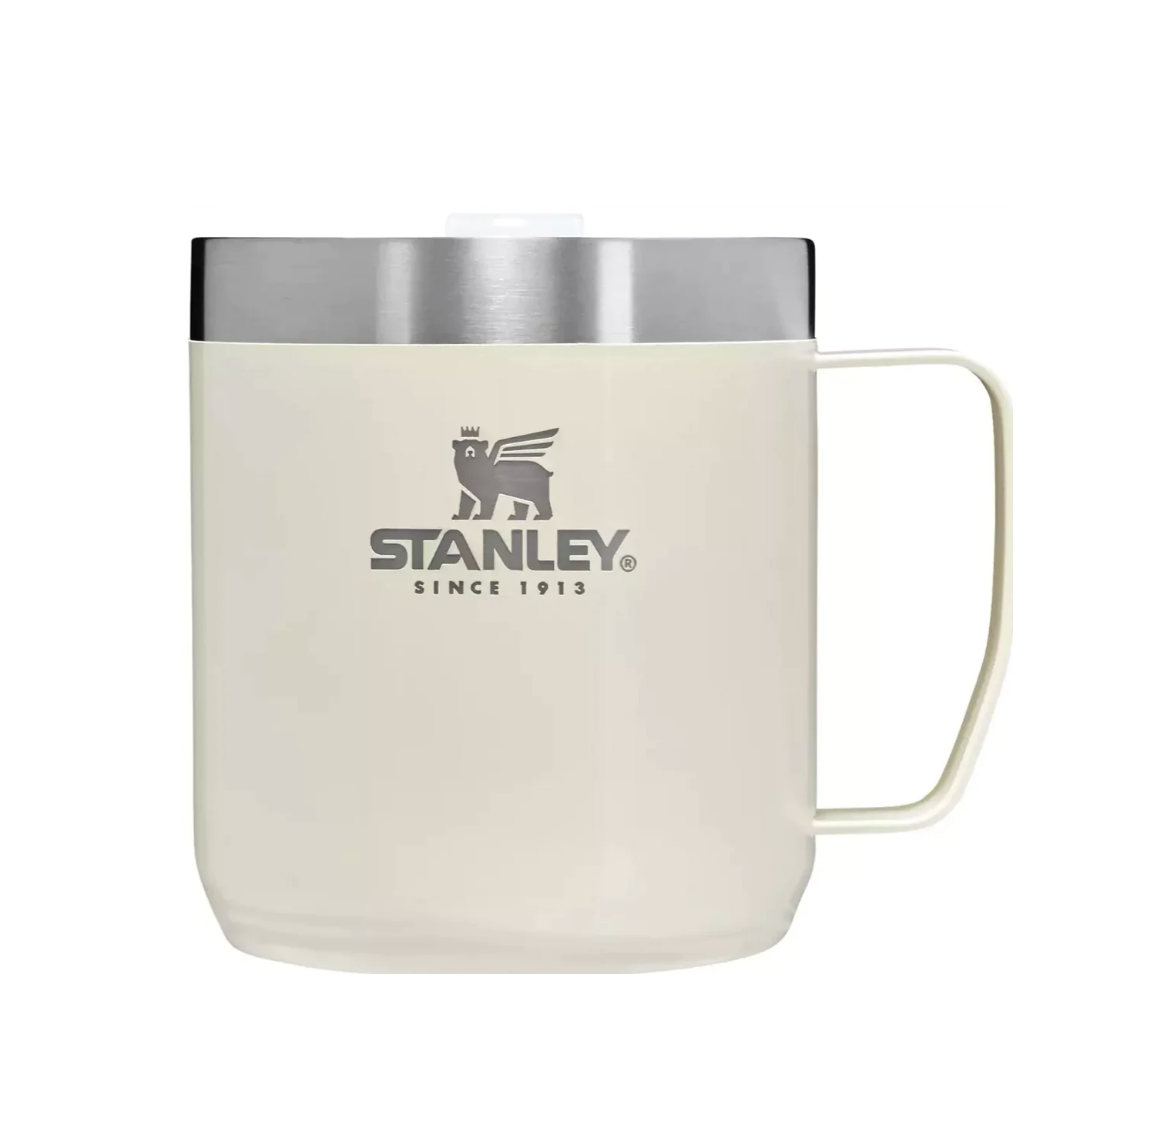 Stanley Black Friday deals on tumblers, mugs, water bottles